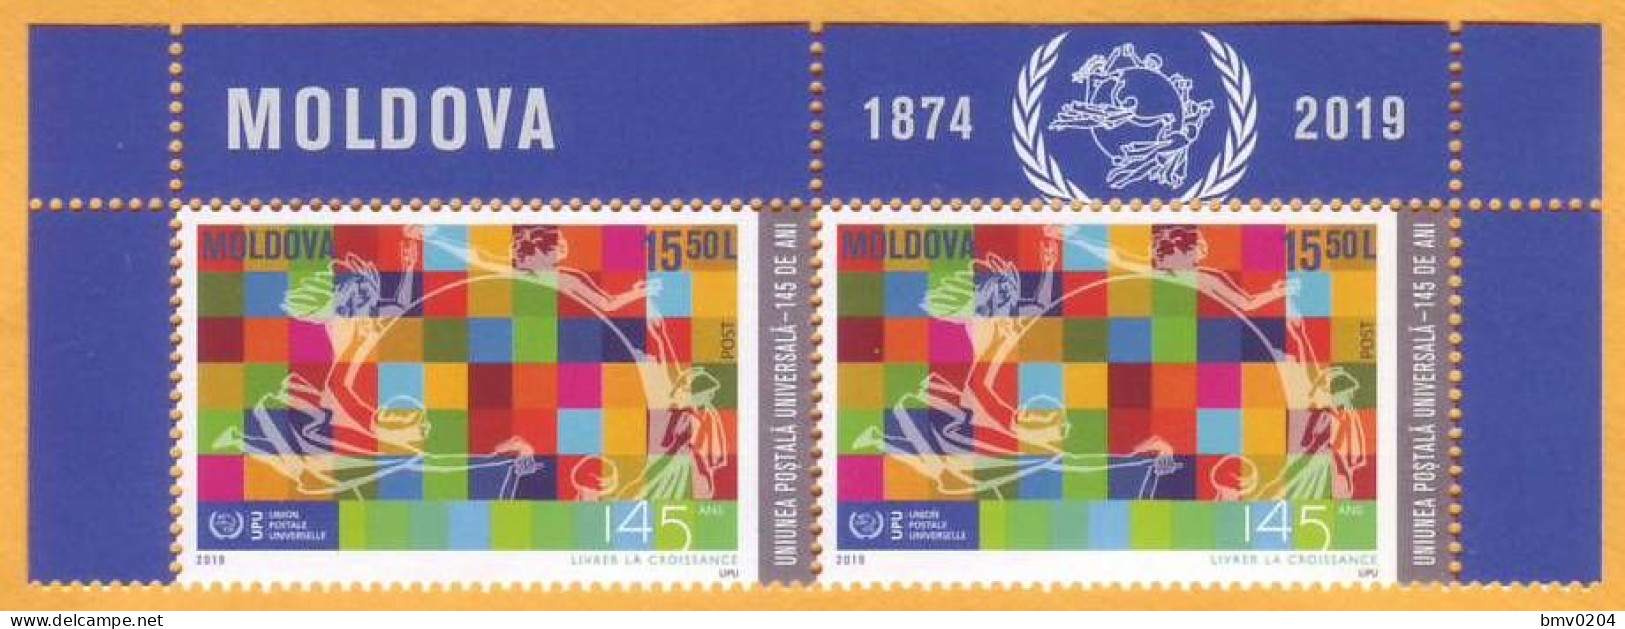 2019 Moldova Moldavie  145 Universal Postal Union. Switzerland. Berne. Monument  2v  Mint. - Moldavië